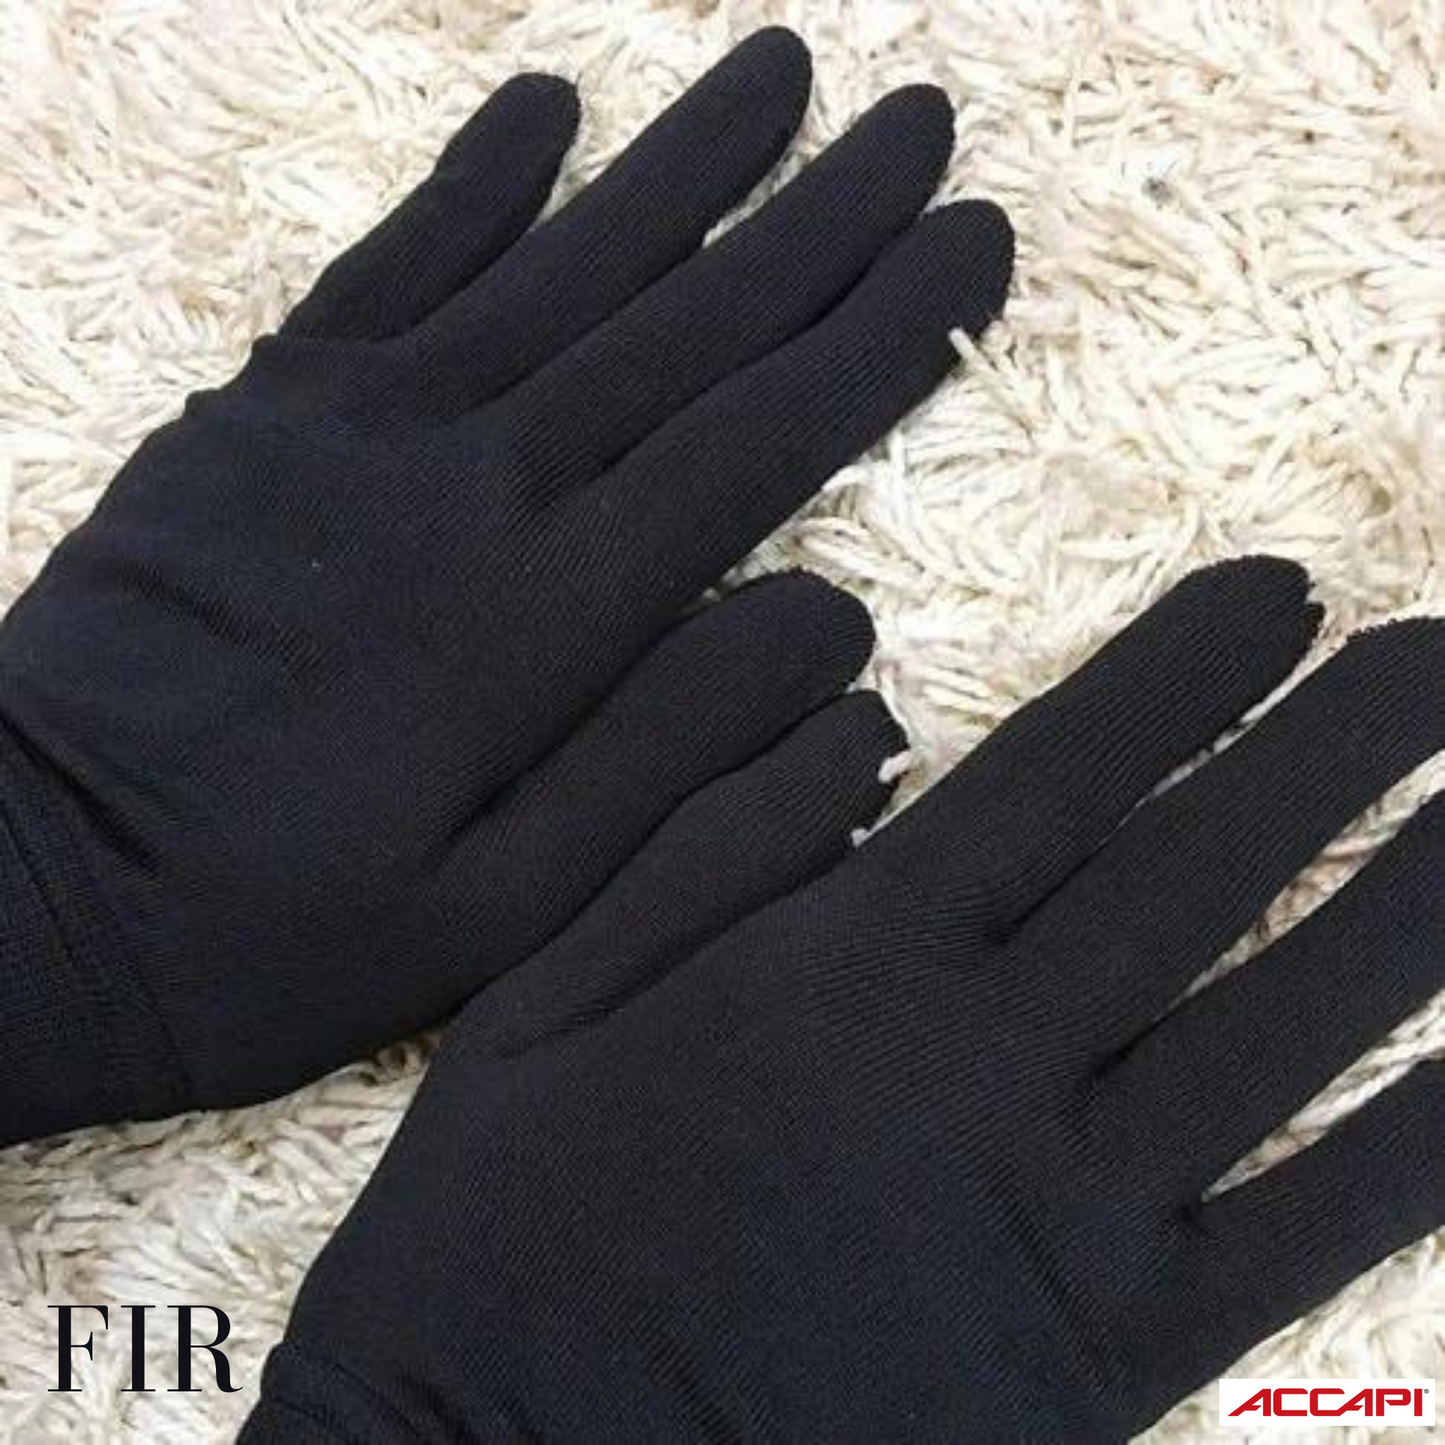 ACCAPI Accapi FIR UNDERGLOVES Far Infrared Gloves Unisex NN335